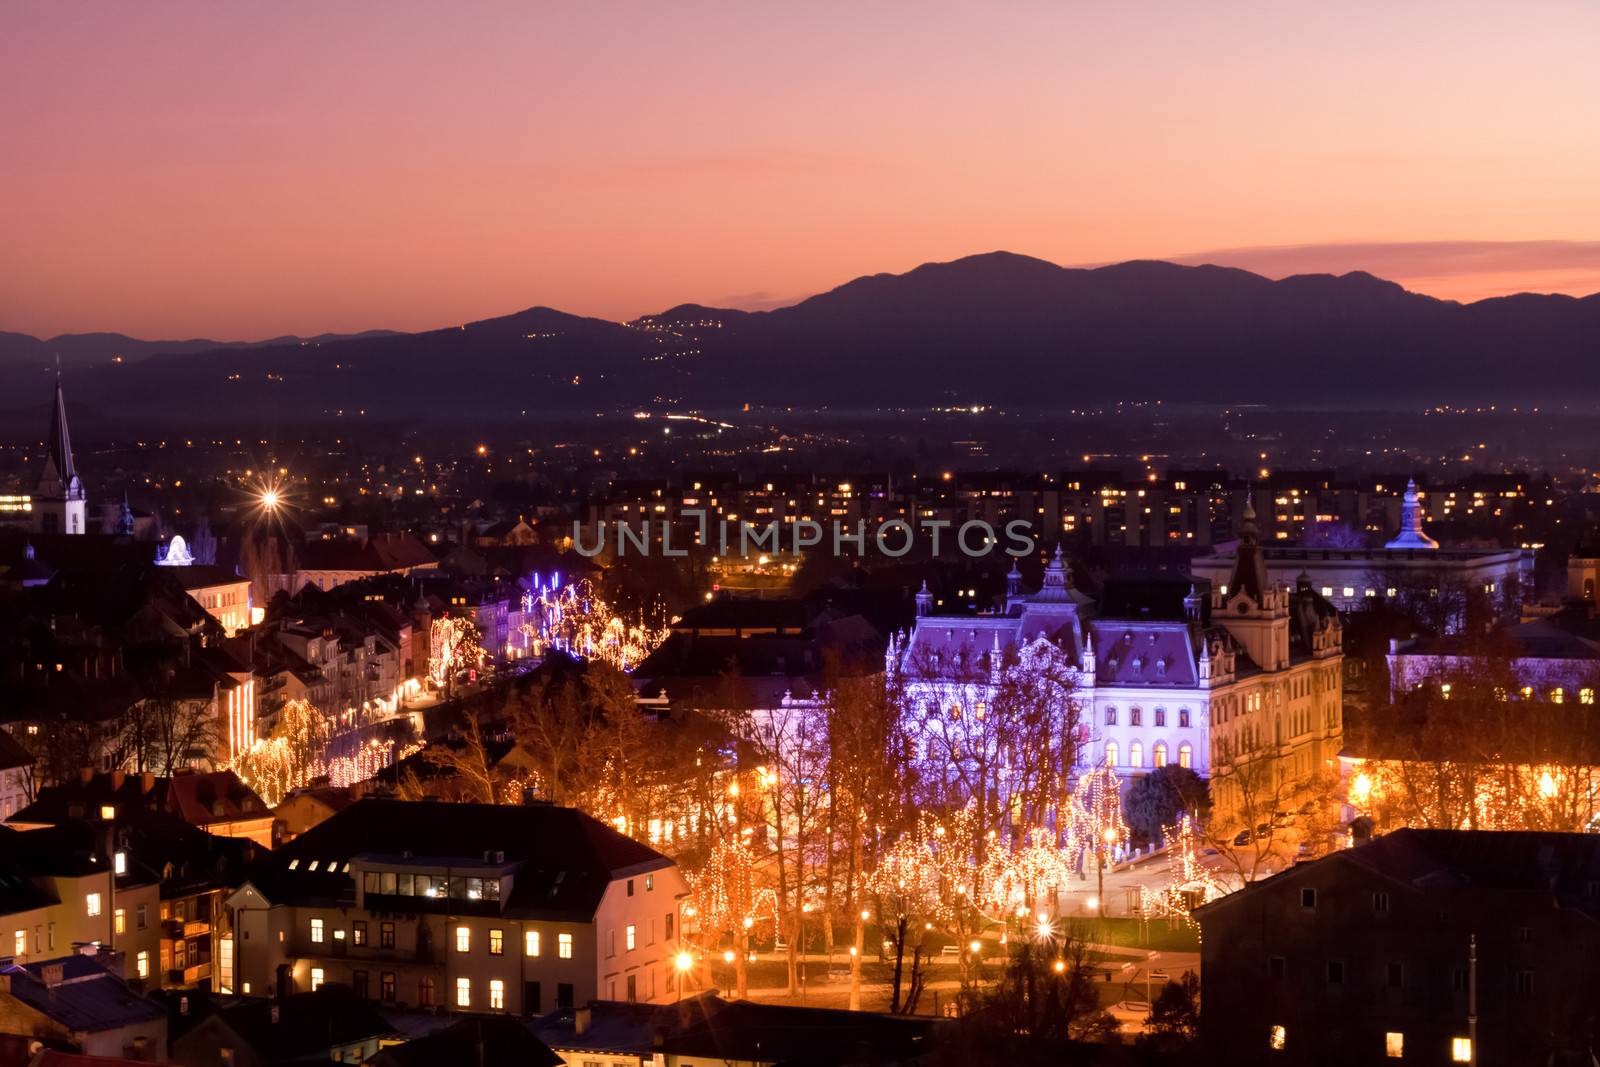 Aeirial panoramic view of romantic medieval Ljubljana's city centre, the capital of Slovenia, decorated for Christmas holidays. Ljubljana, Slovenia, Europe.